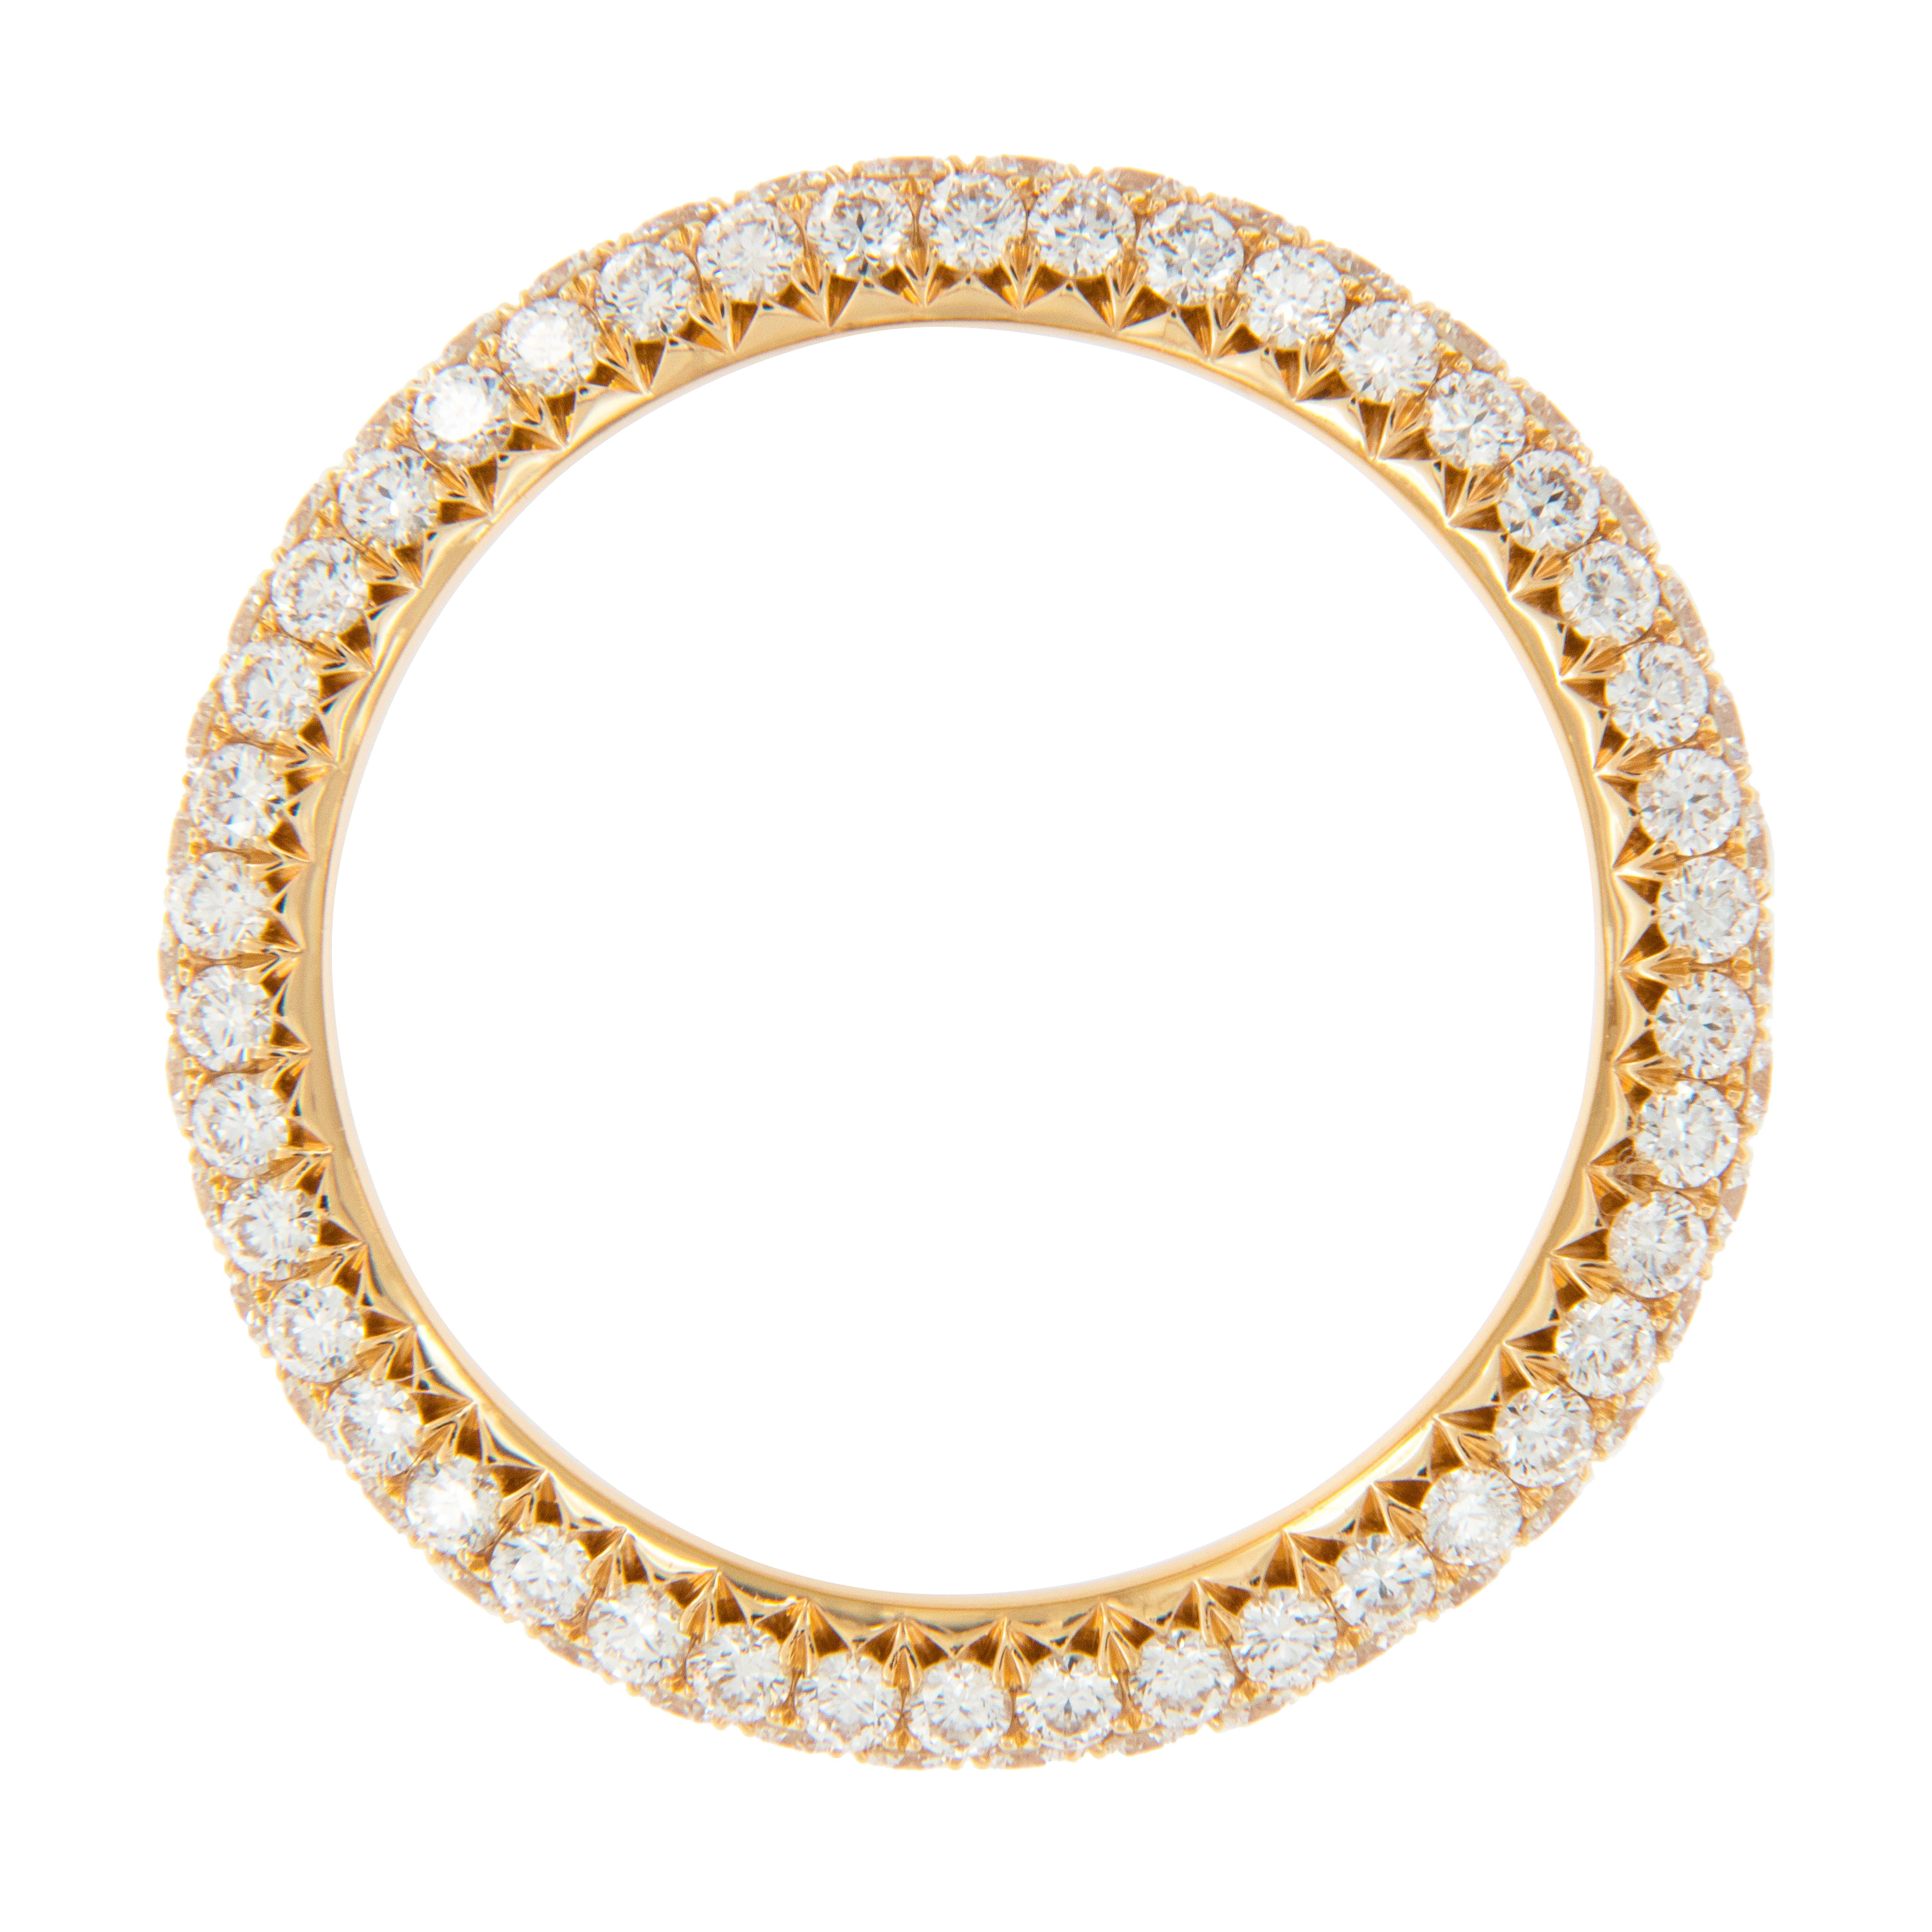 Contemporary William Rosenberg 18 Karat Rose Gold 1.51 Carat Pave' Diamond Eternity Ring